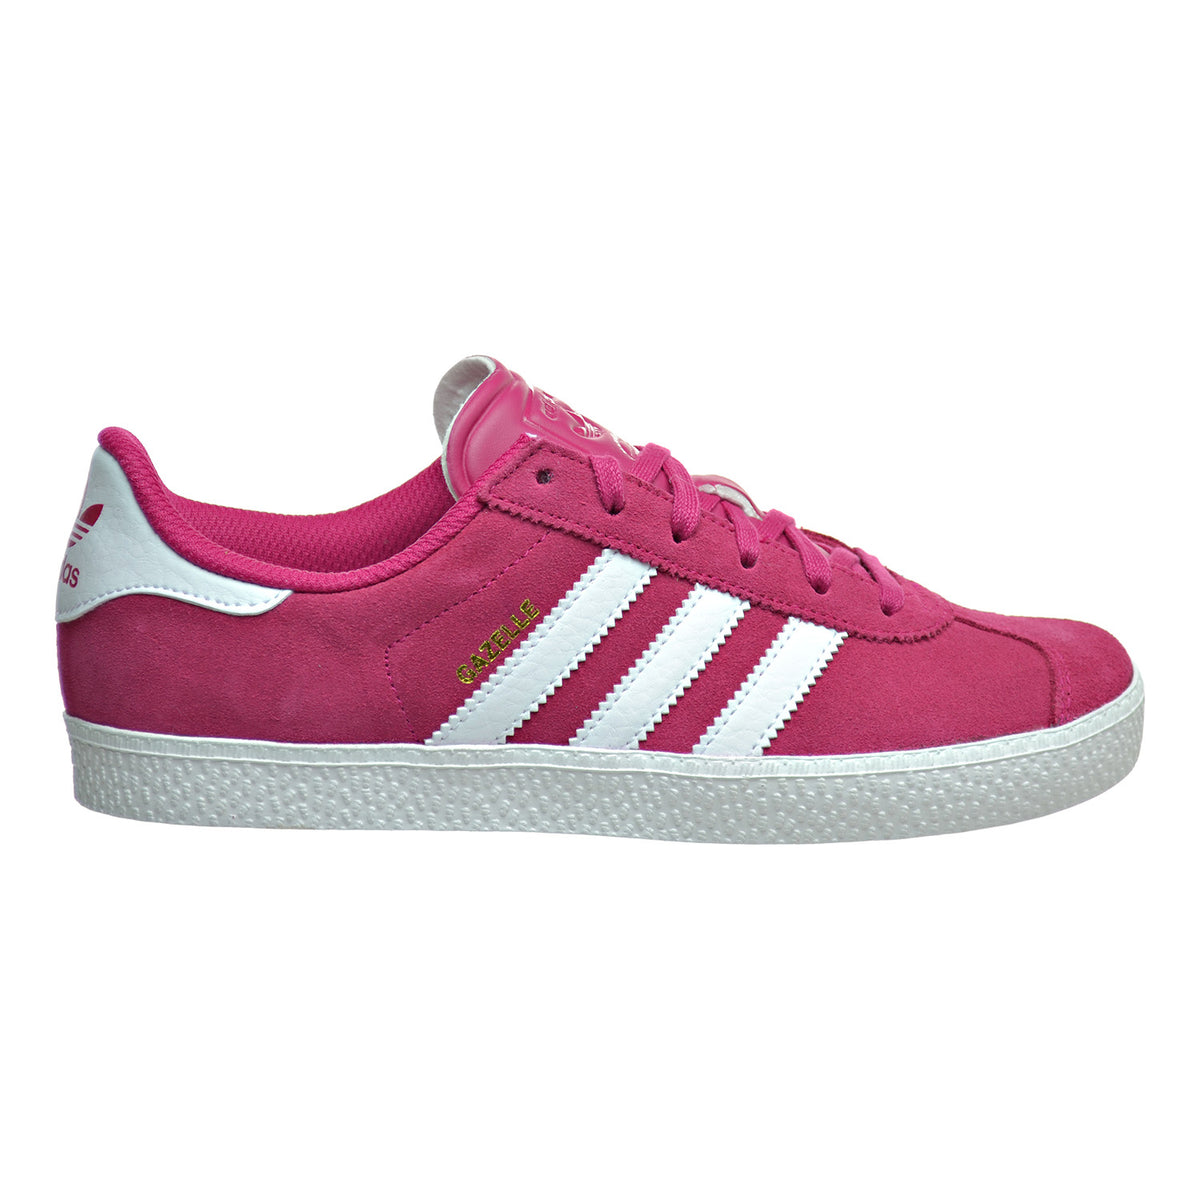 Duplicaat element Componist Adidas Gazelle 2 J Big Kid's Shoes Bold Pink/White/White